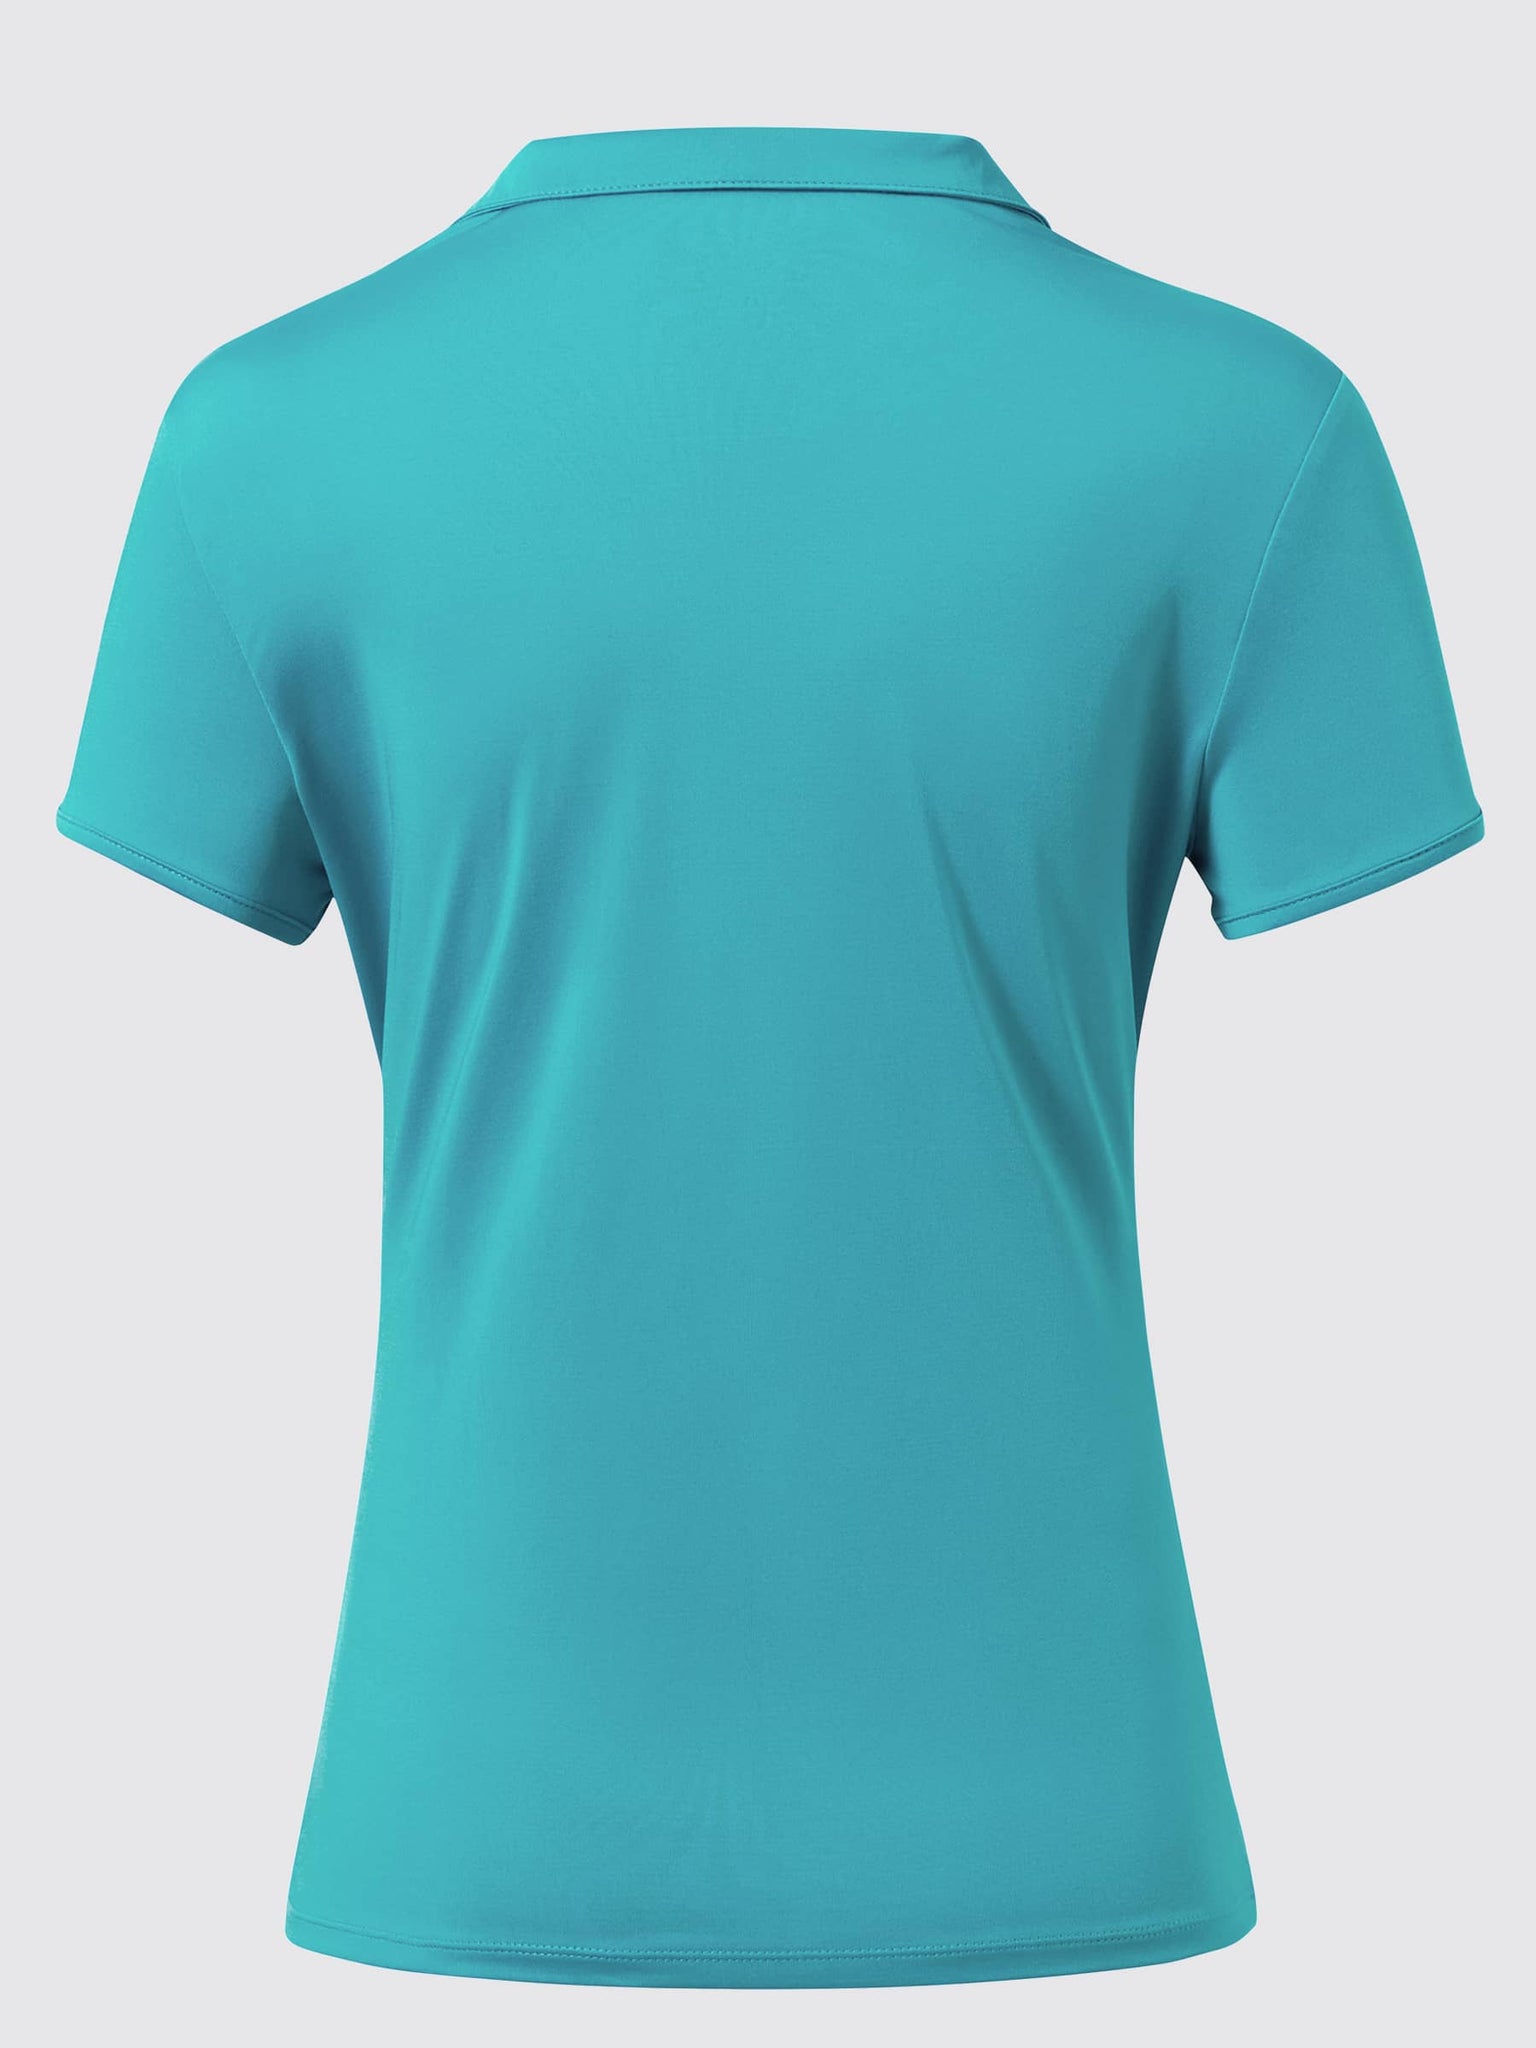 Willit Women's Golf Polo Short Sleeve Shirts_Aqua3